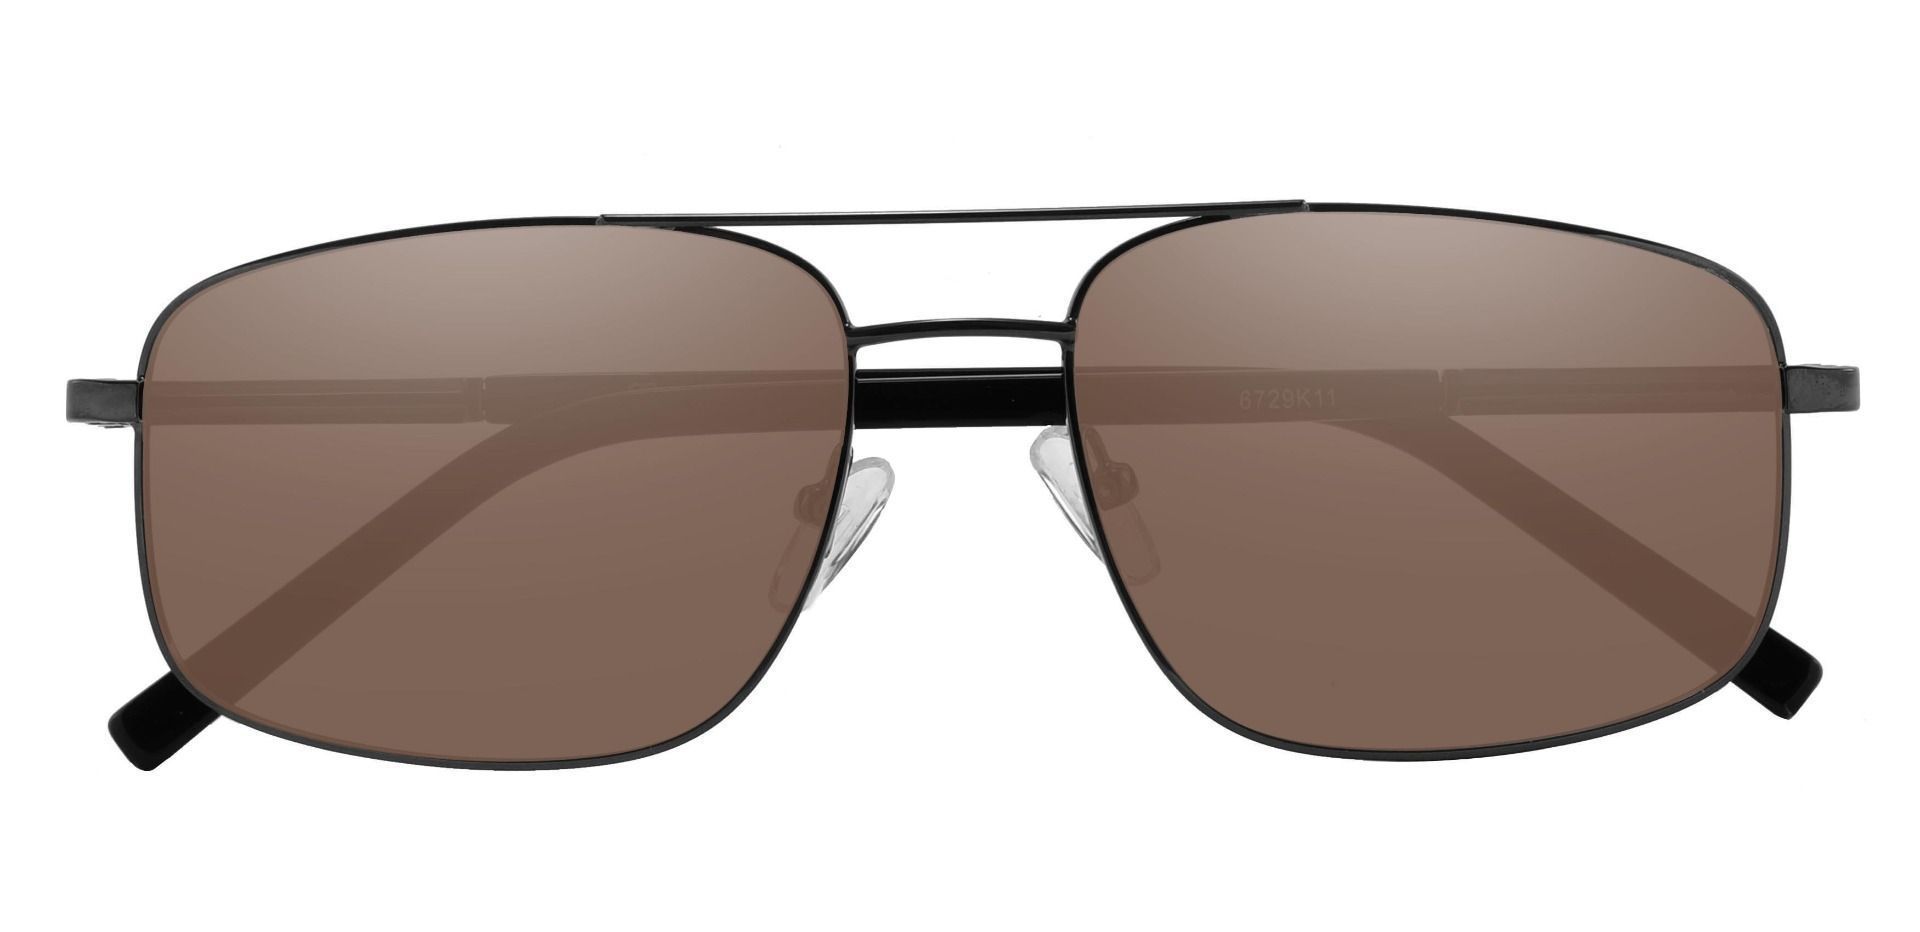 Davenport Aviator Non-Rx Sunglasses - Black Frame With Brown Lenses